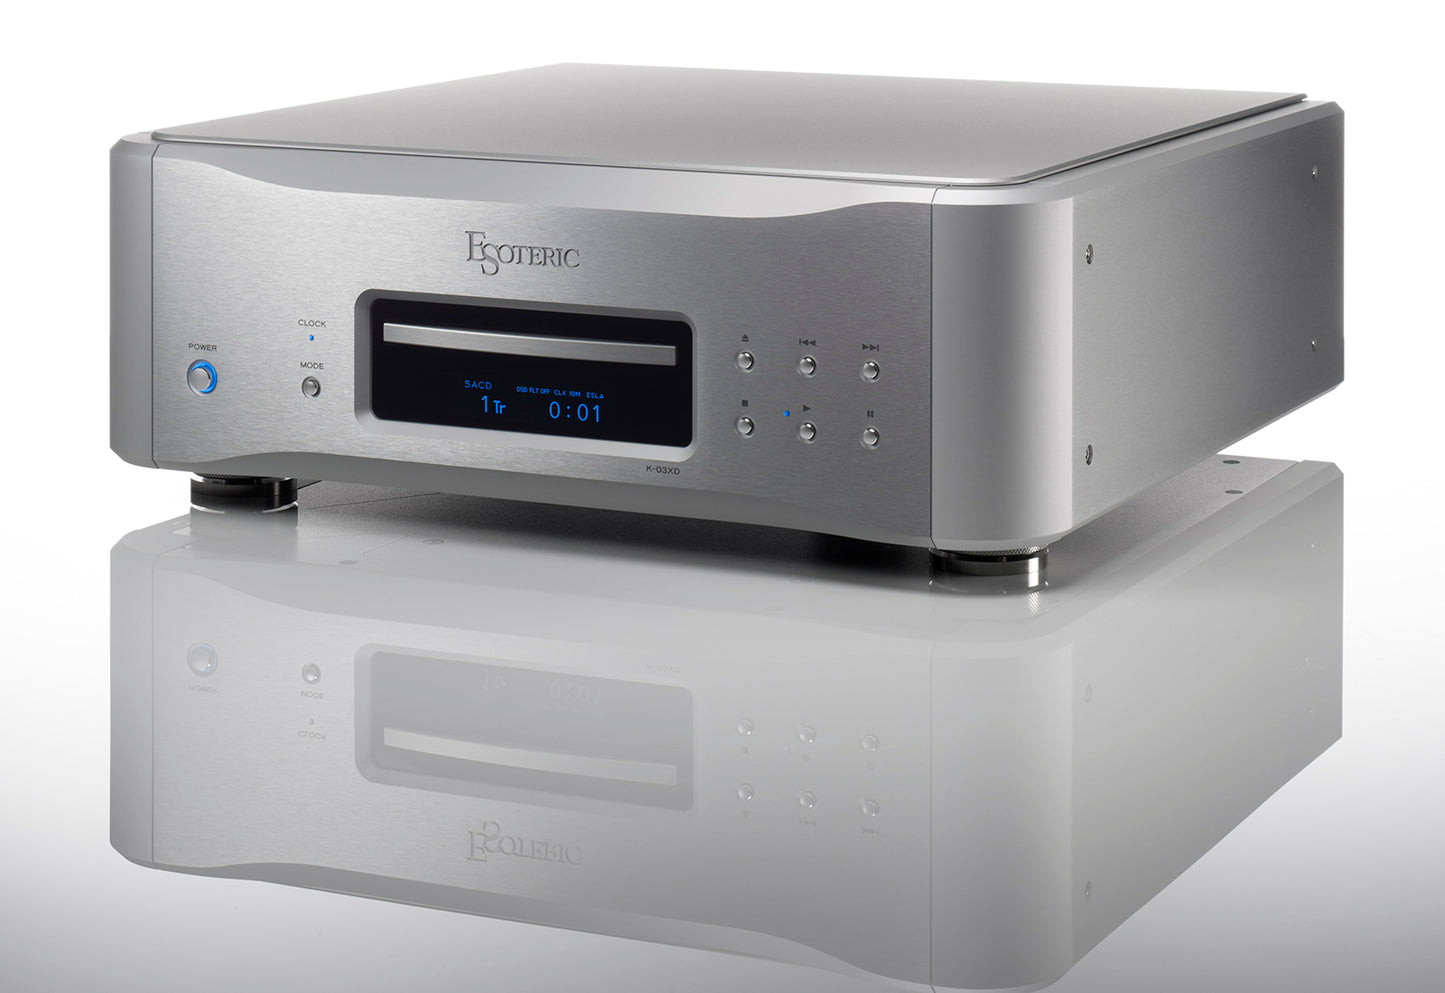 Esoteric K-03XD Super Audio CD/CD Player